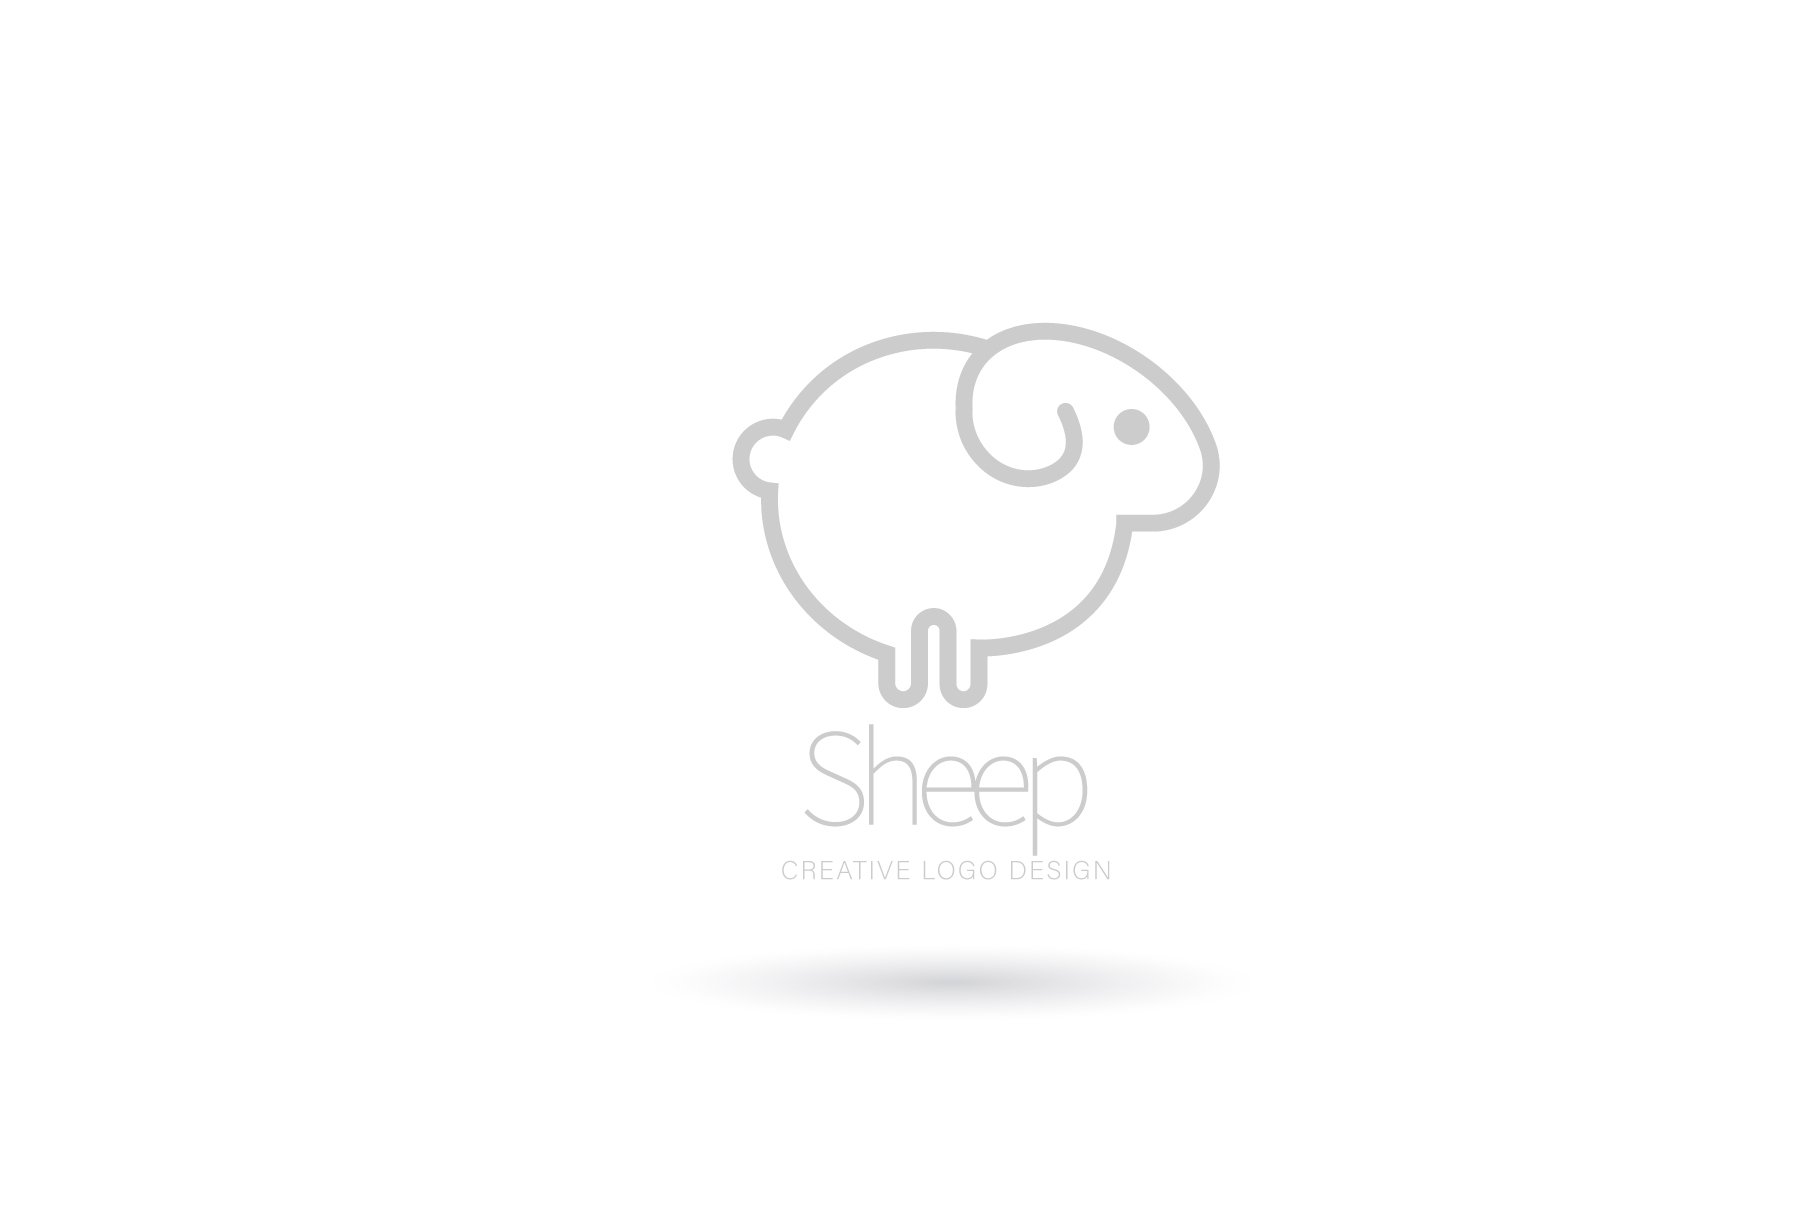 Sheep logo preview image.